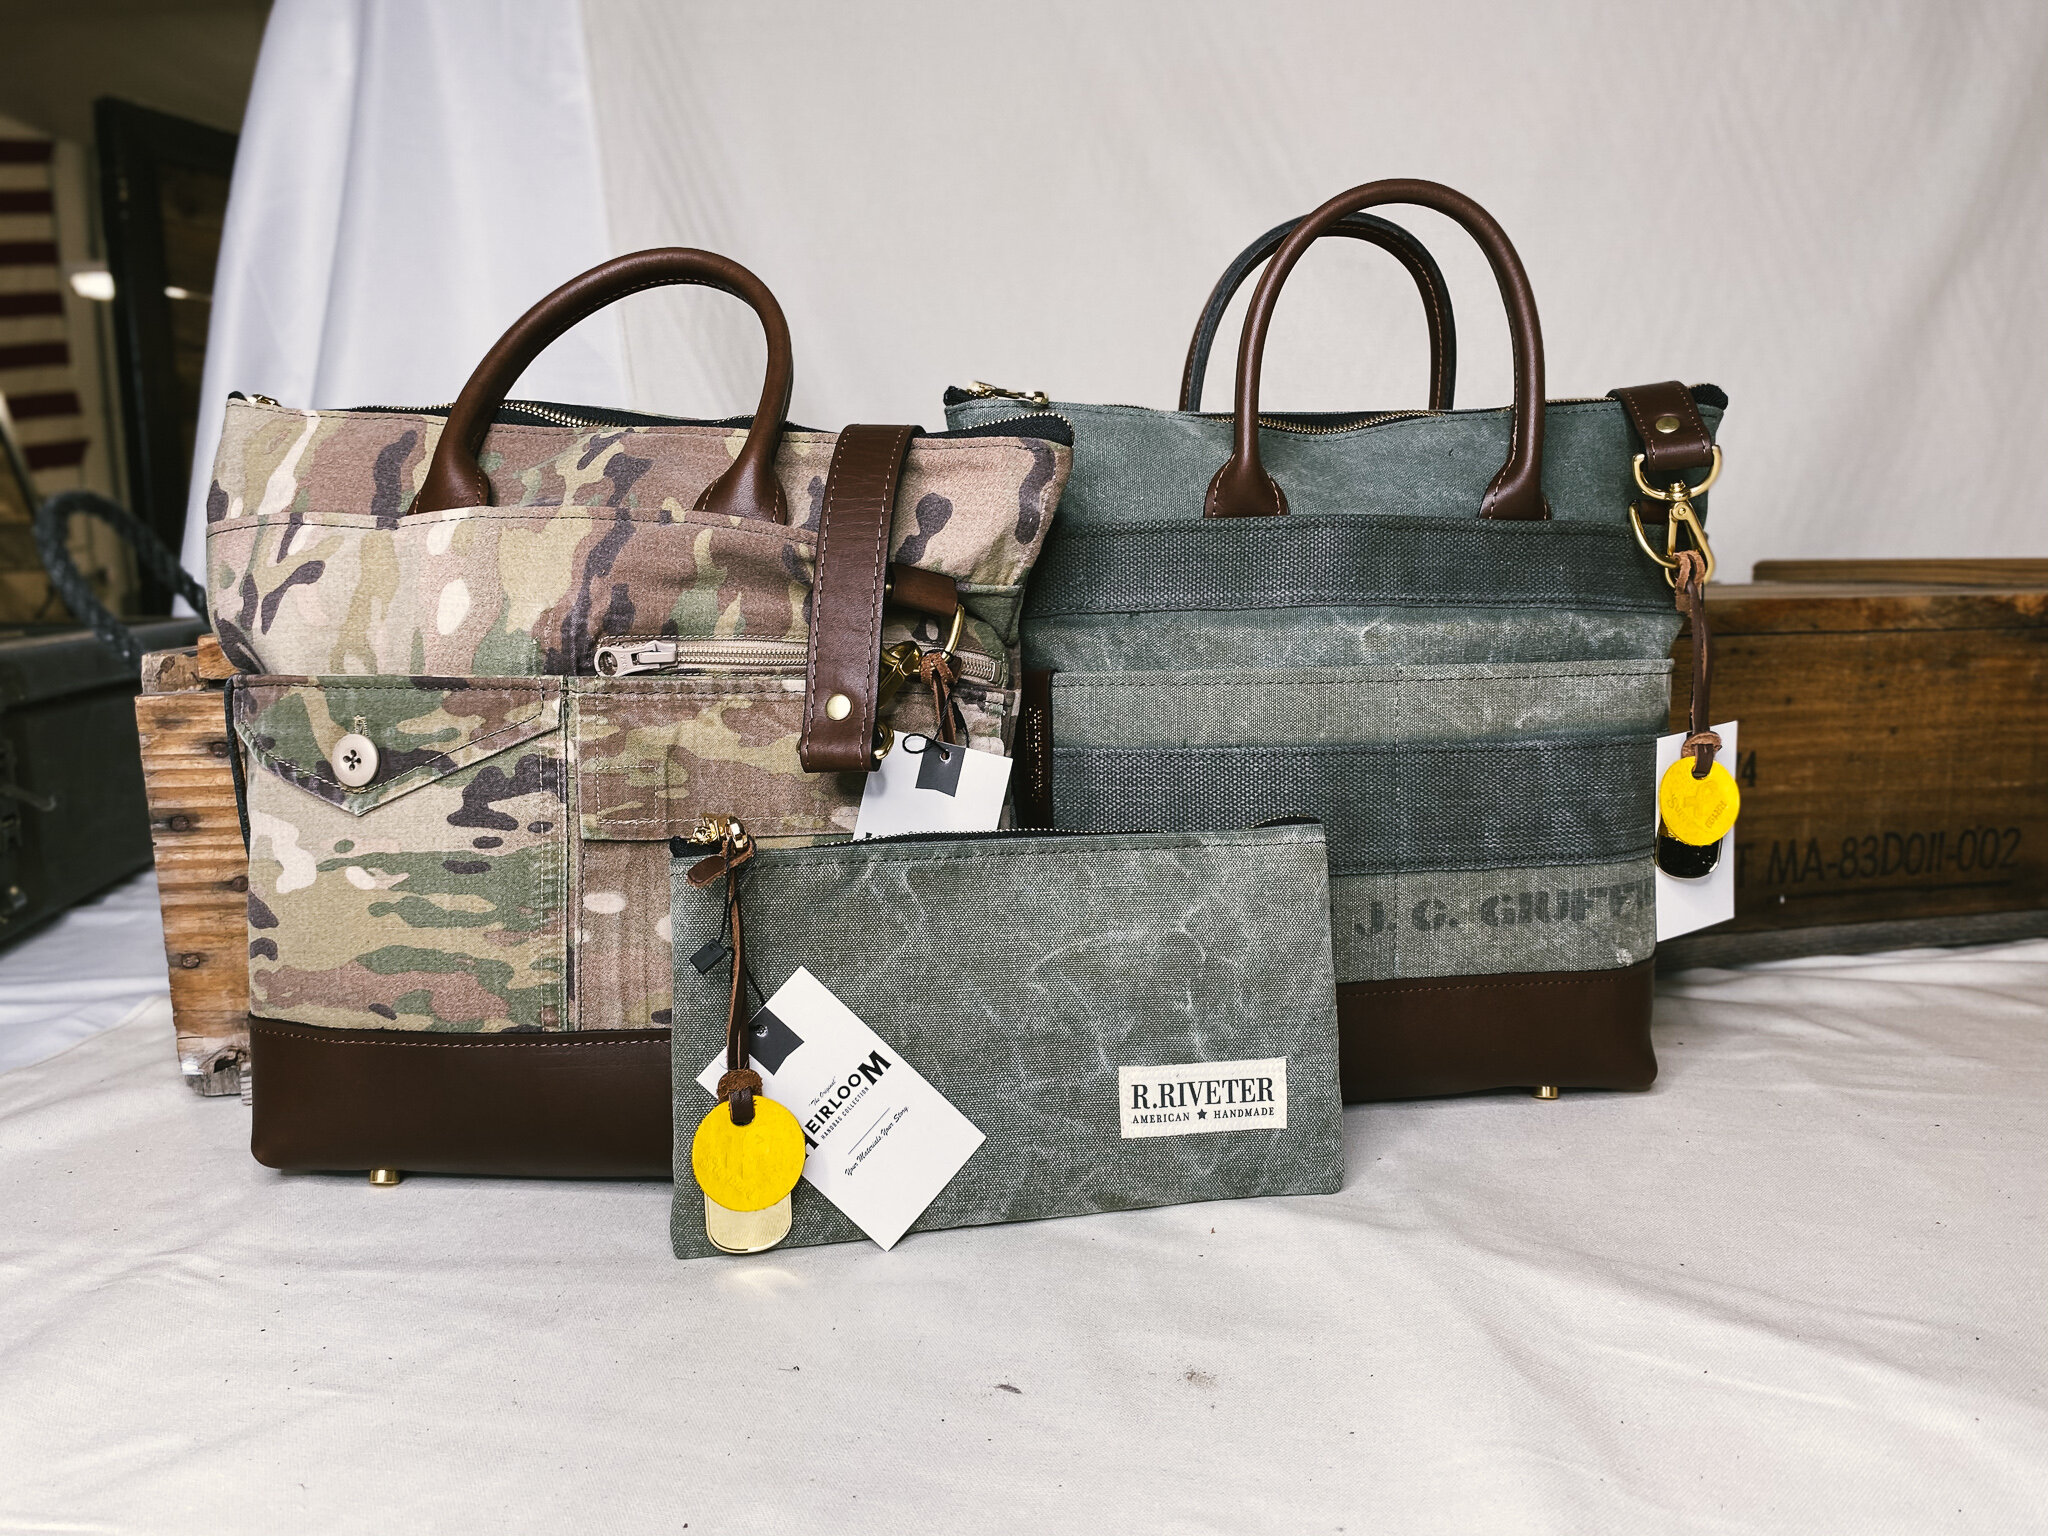 Hermès Tote Bag -  New Zealand